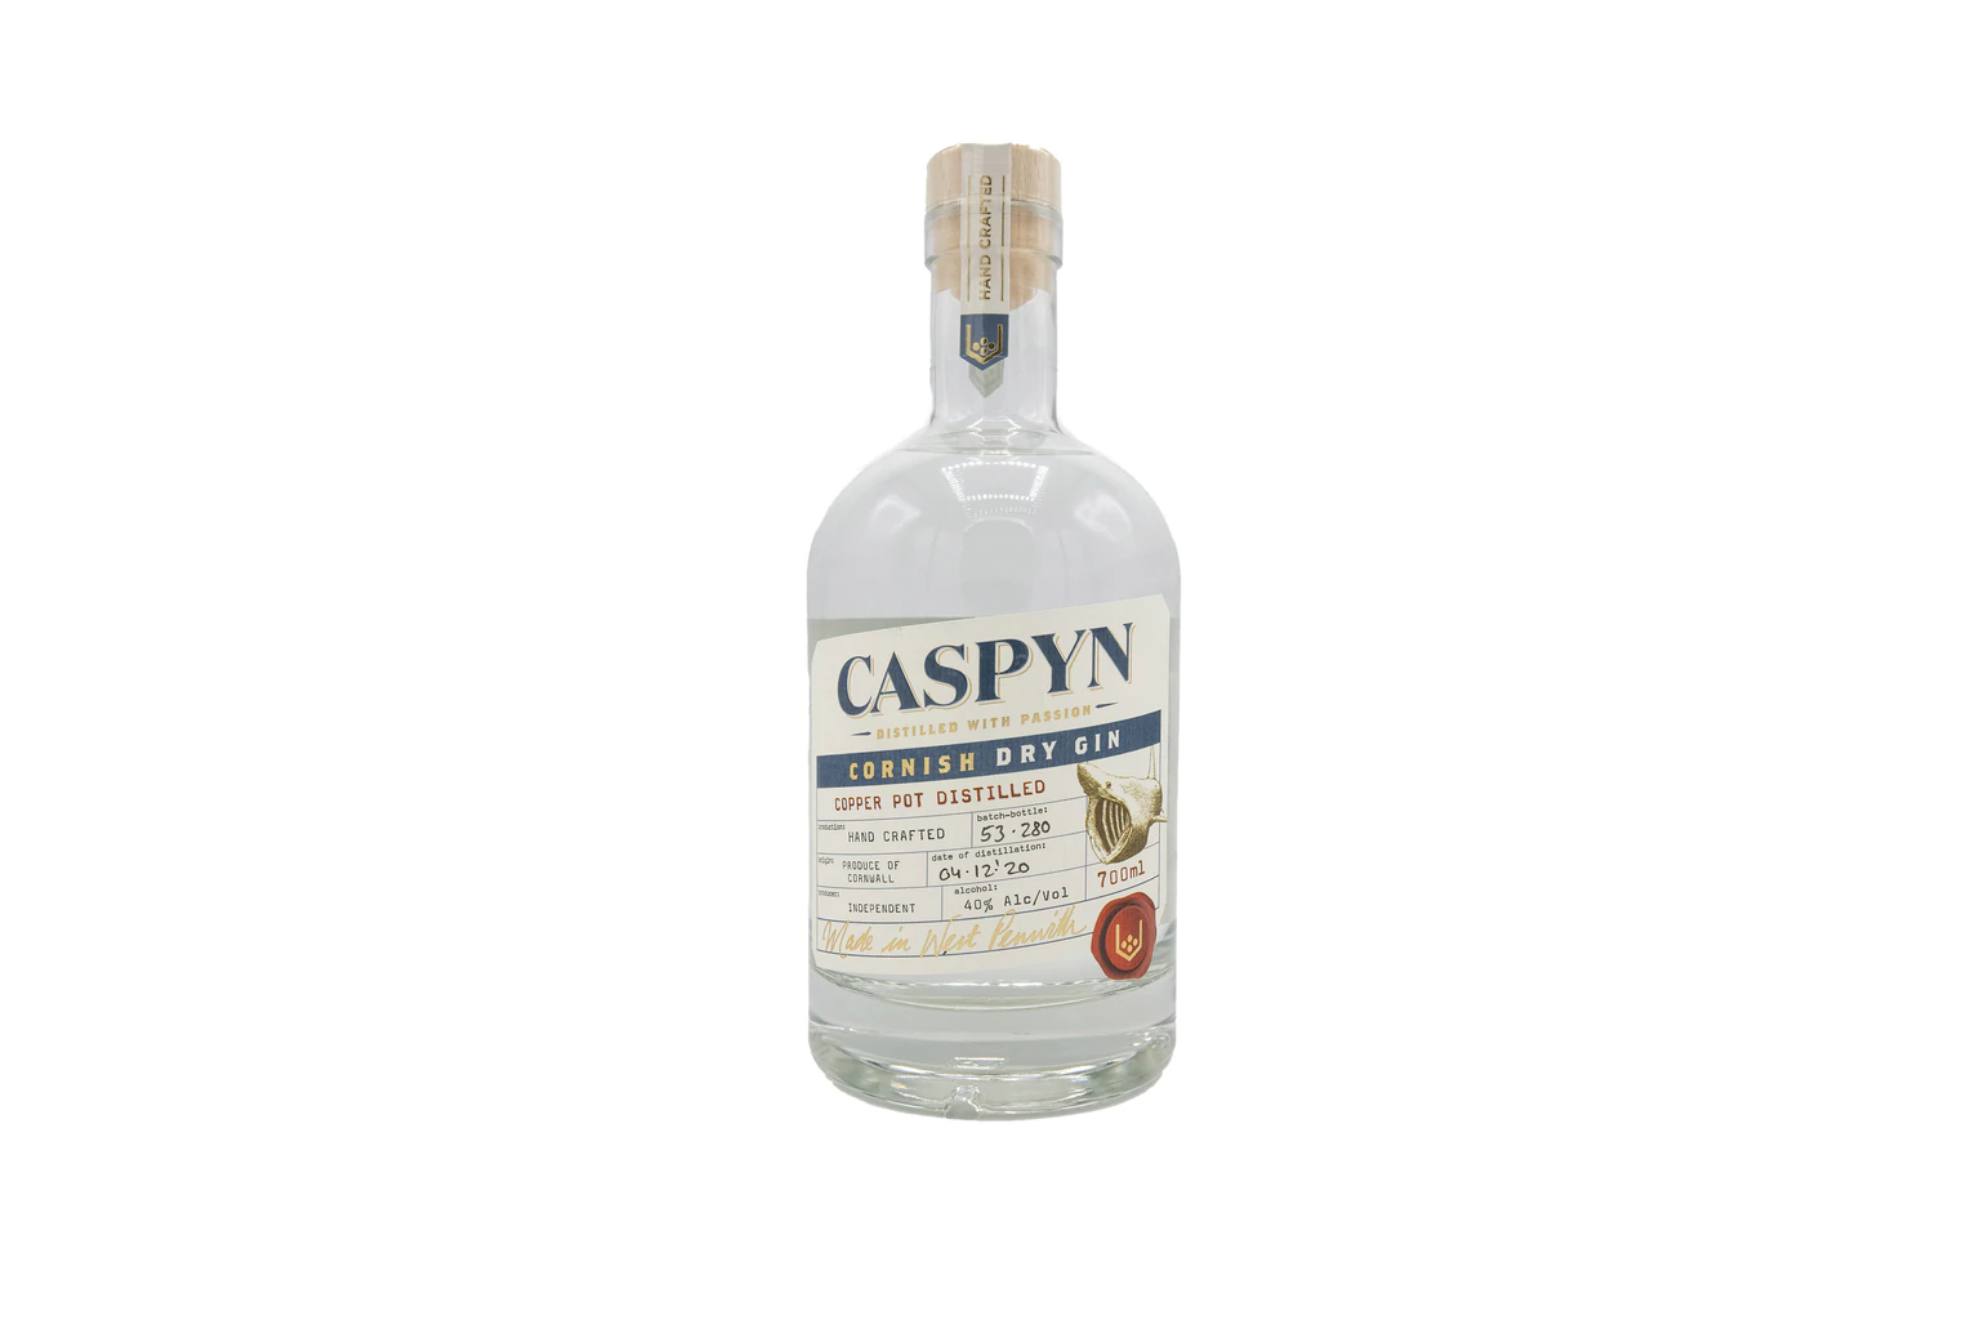 Caspyn Cornish Dry Gin 40% 70cl